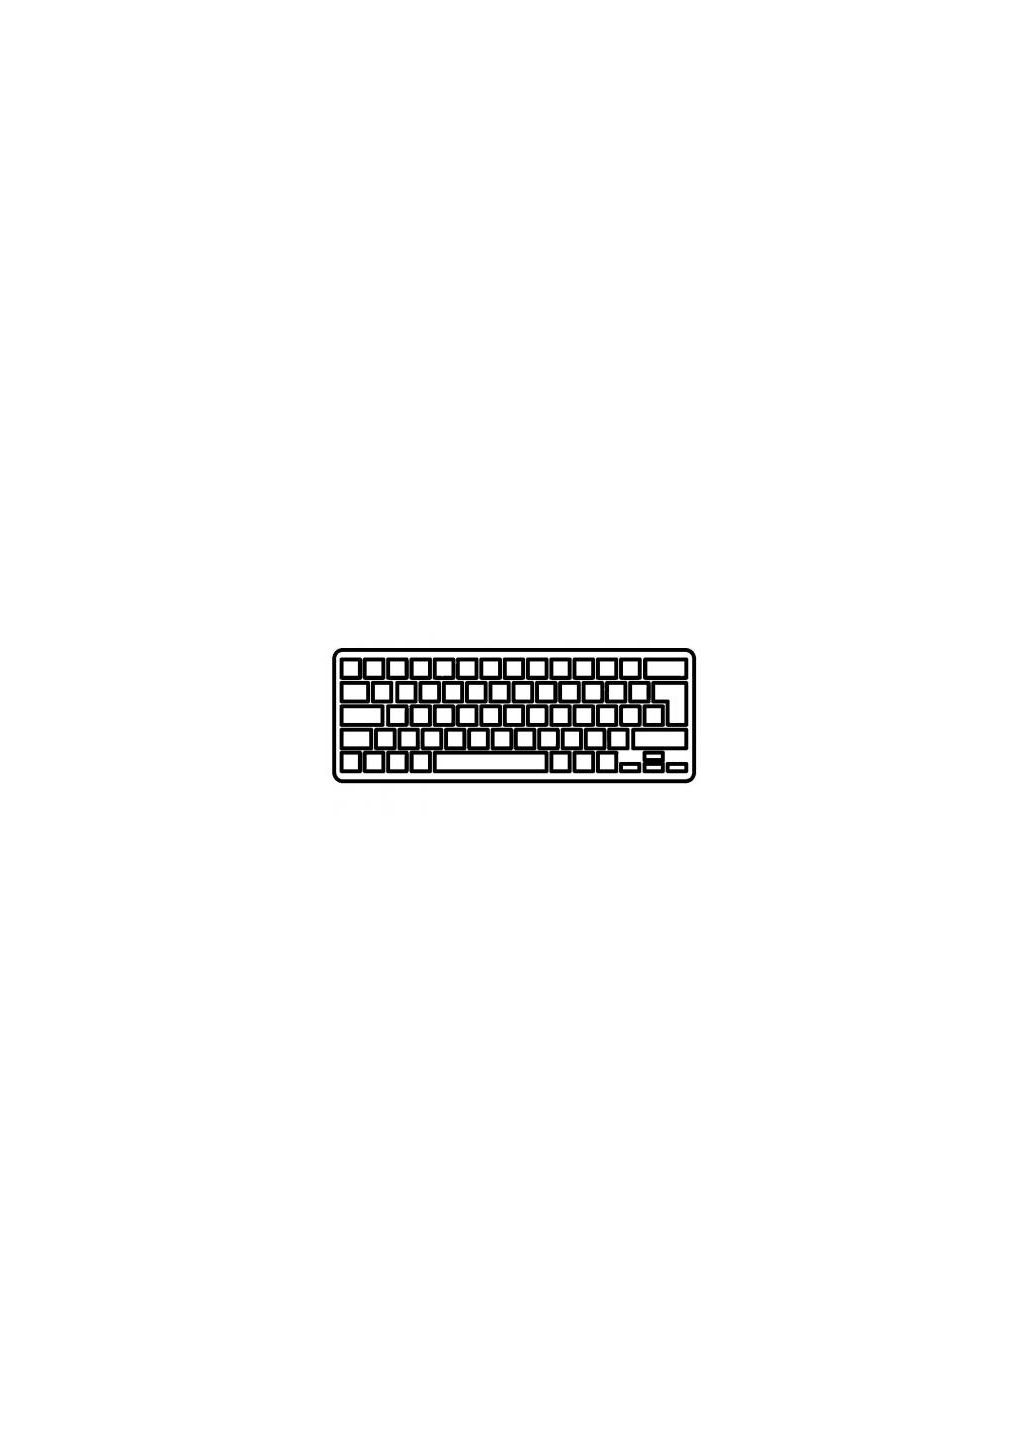 Клавиатура ноутбука Satellite L40A series черная с черной рамкой UA (A43784) Toshiba satellite l40-a series черная с черной рамкой ua (276706384)